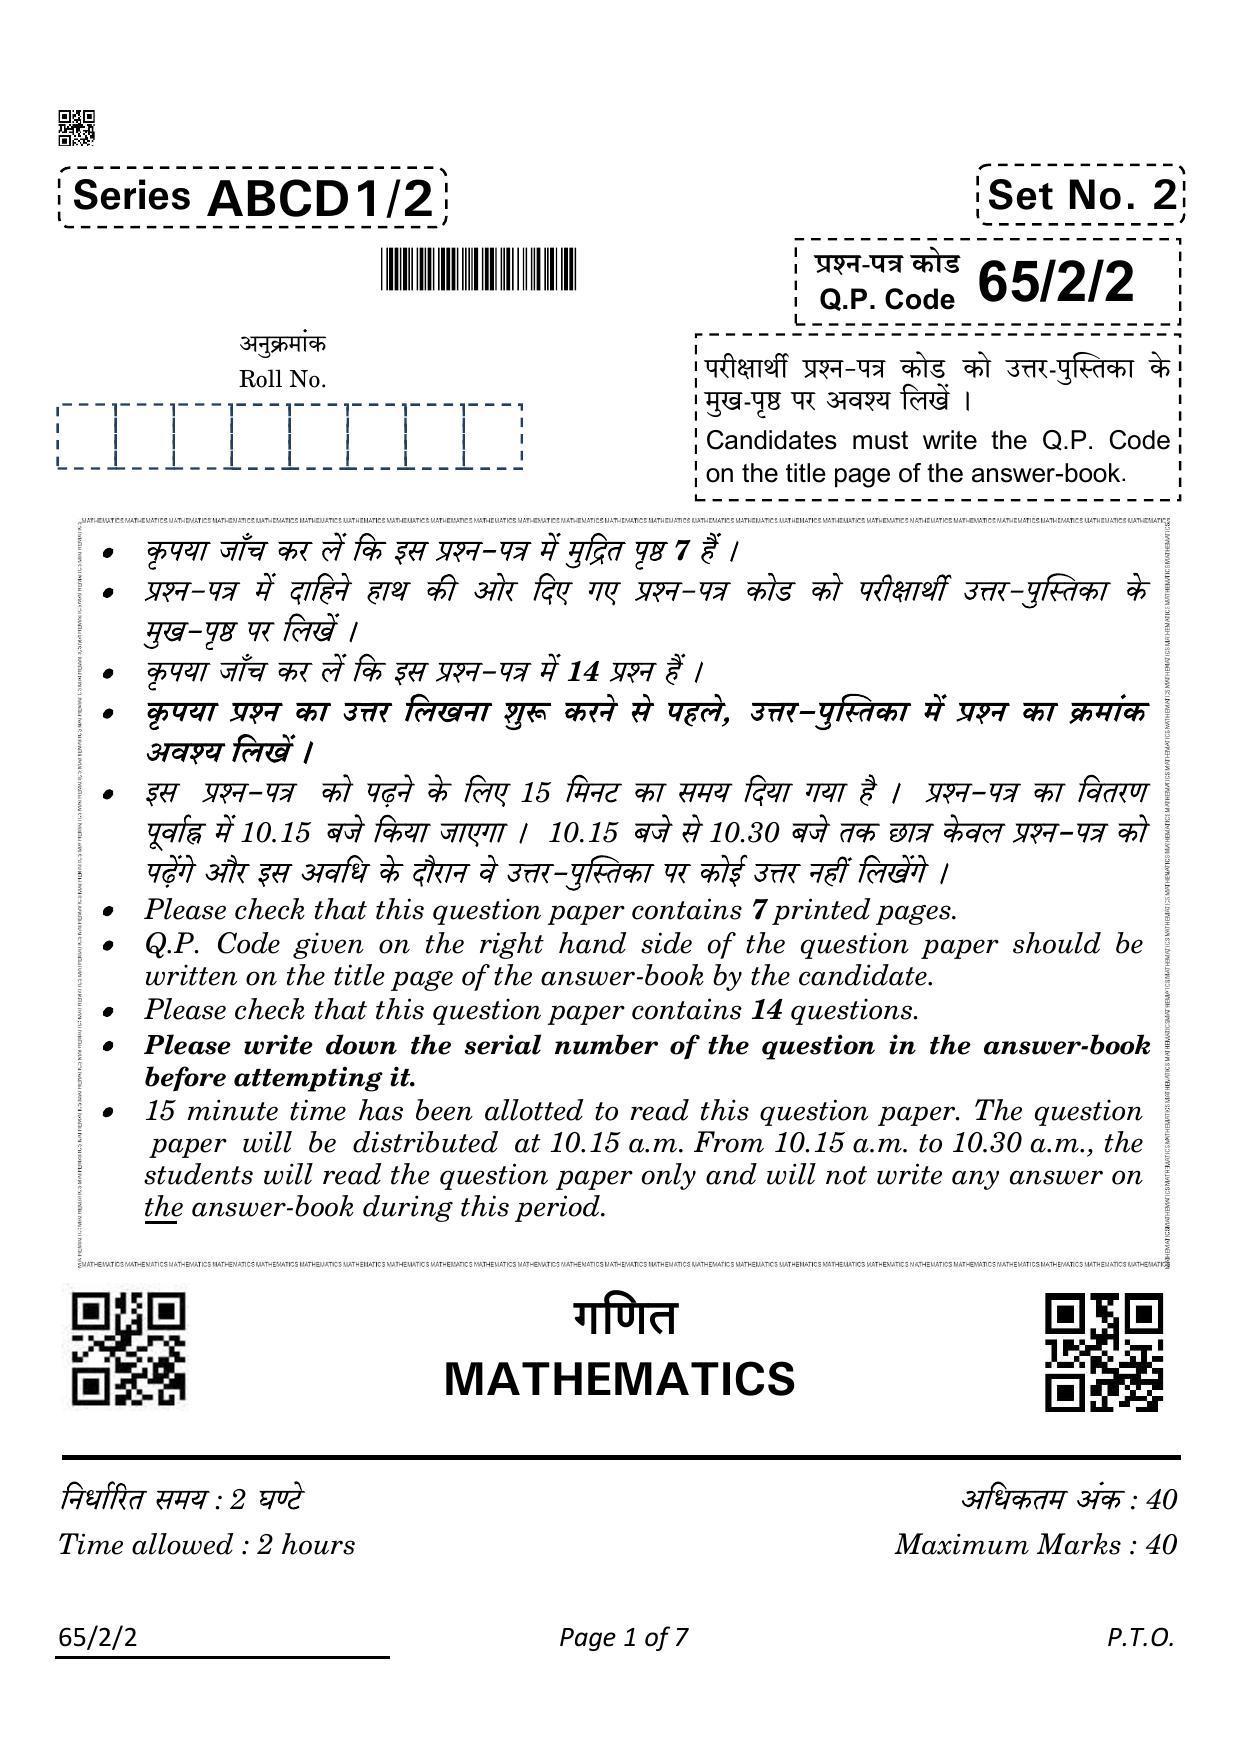 CBSE Class 12 65-2-2 Mathematics 2022 Question Paper - Page 1